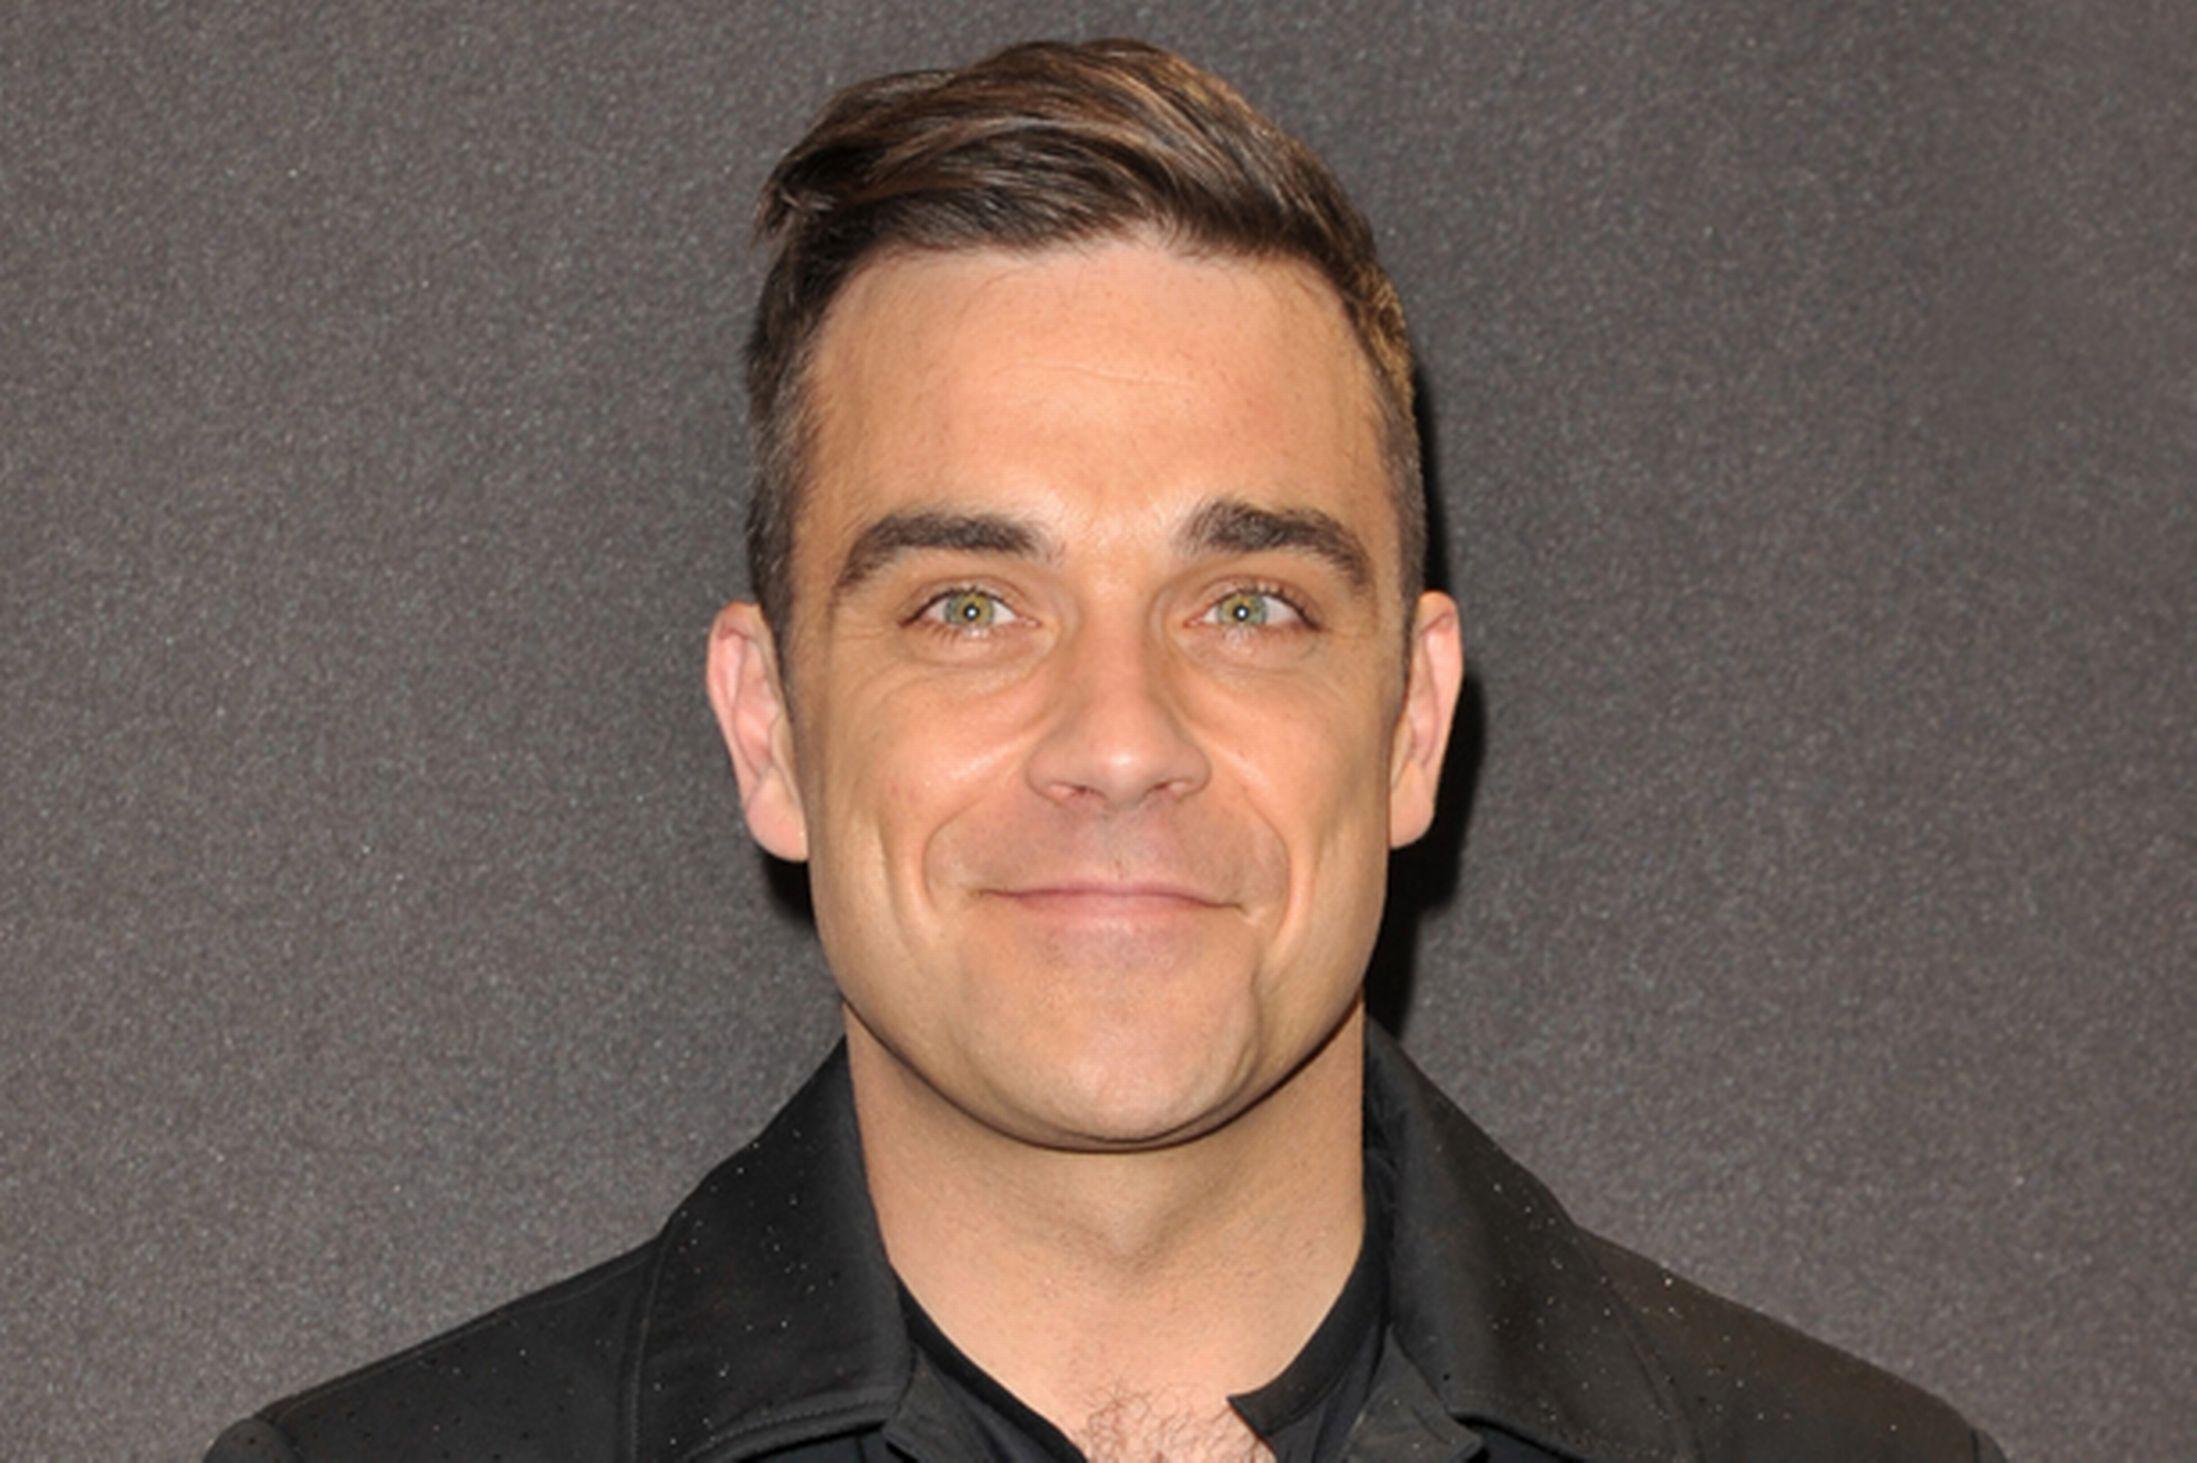 Classify Robbie Williams Please